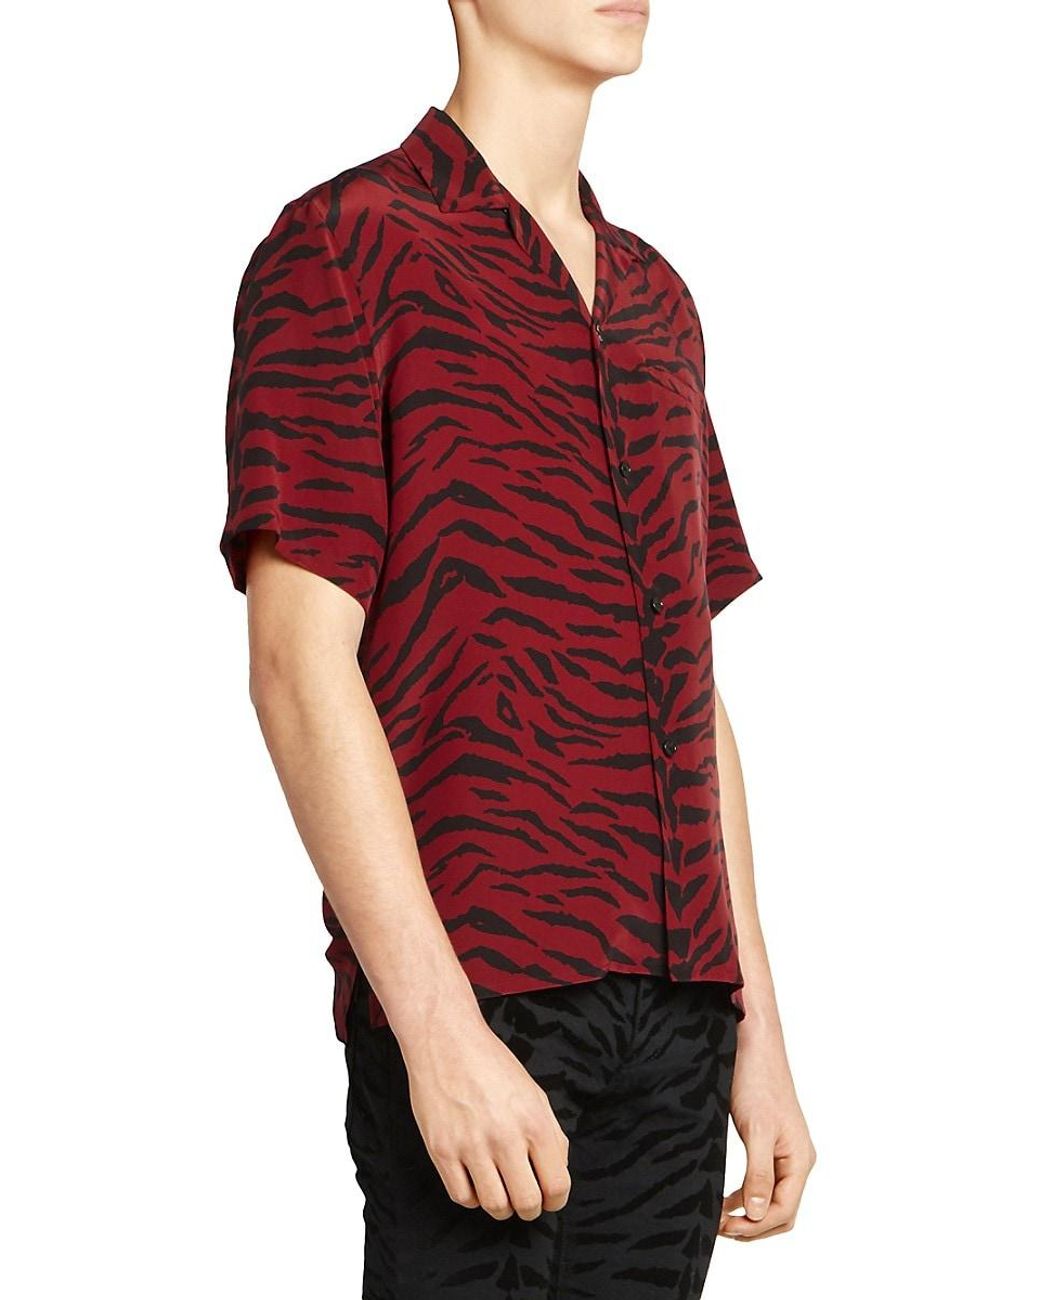 Saint Laurent Zebra Silk Vacation Shirt in Red & Black (Red) for Men 